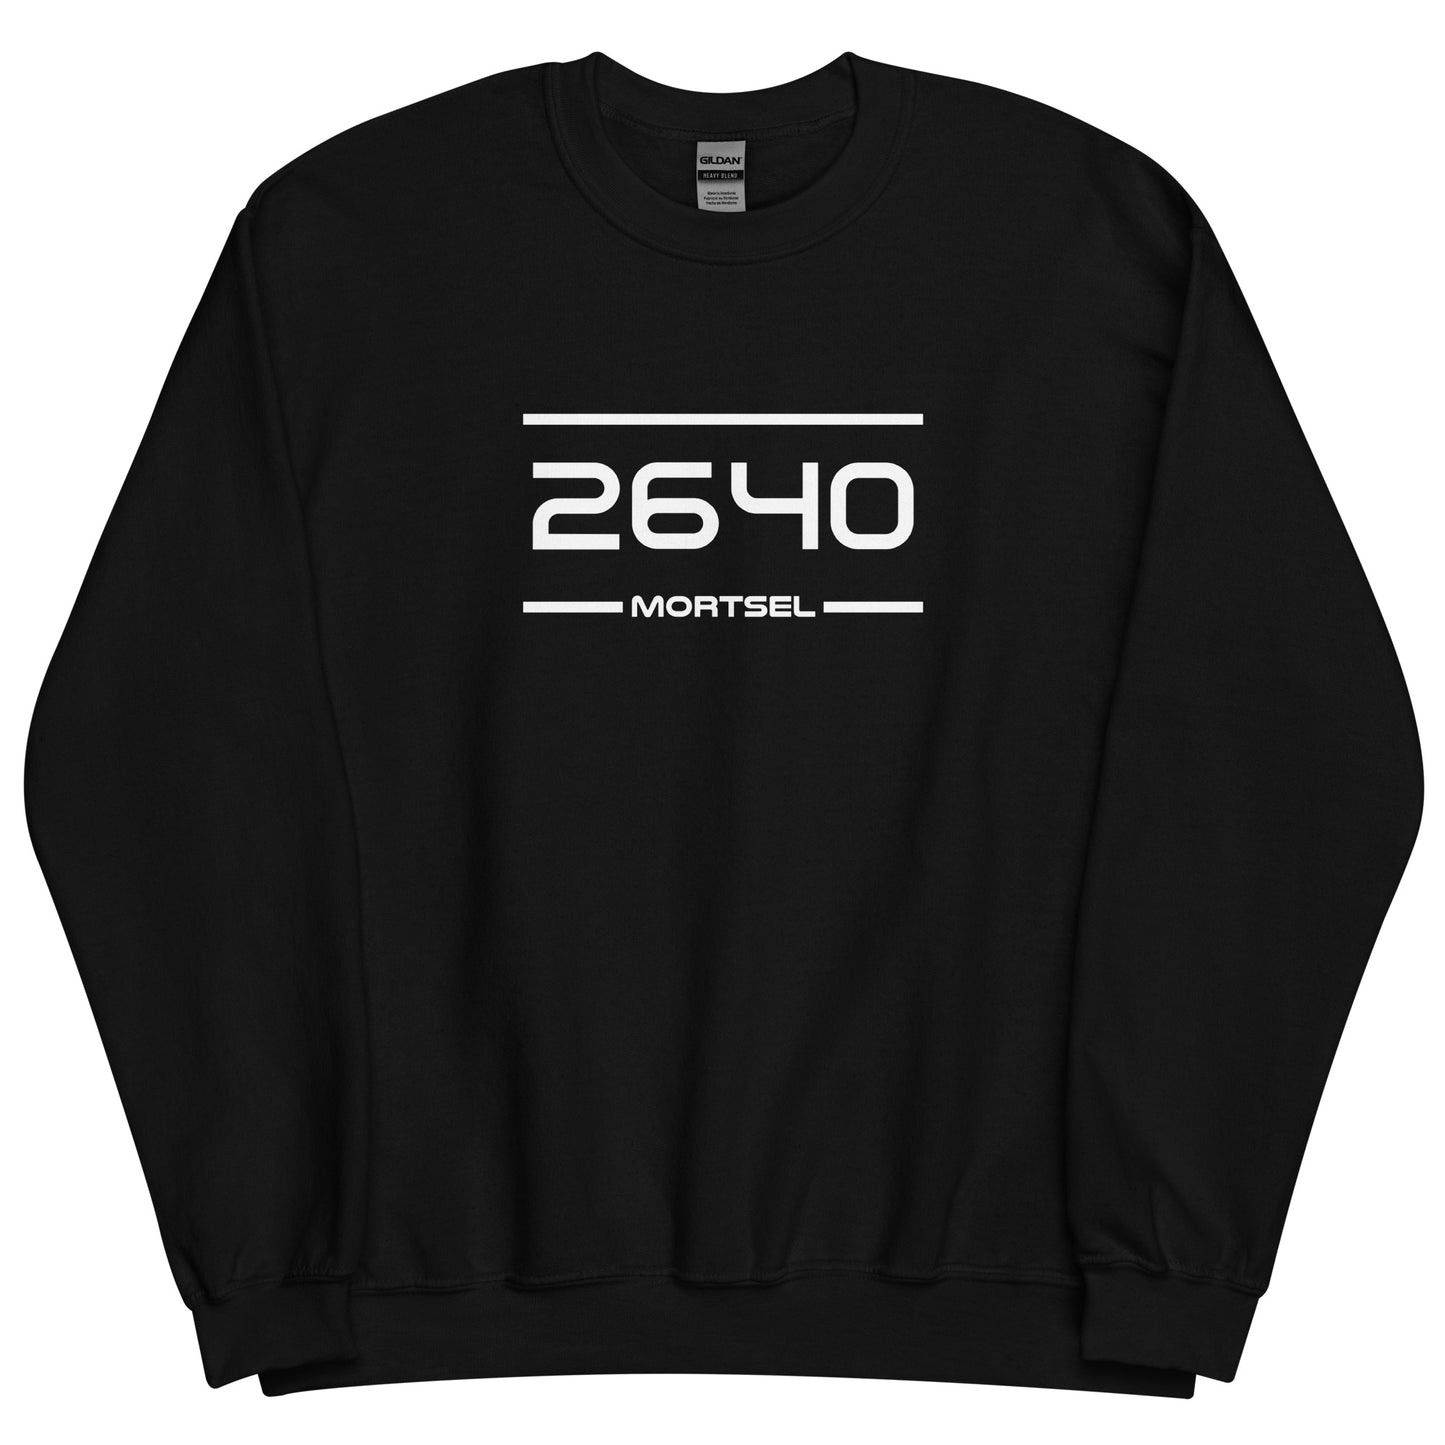 Sweater - 2640 - Mortsel (M/V)